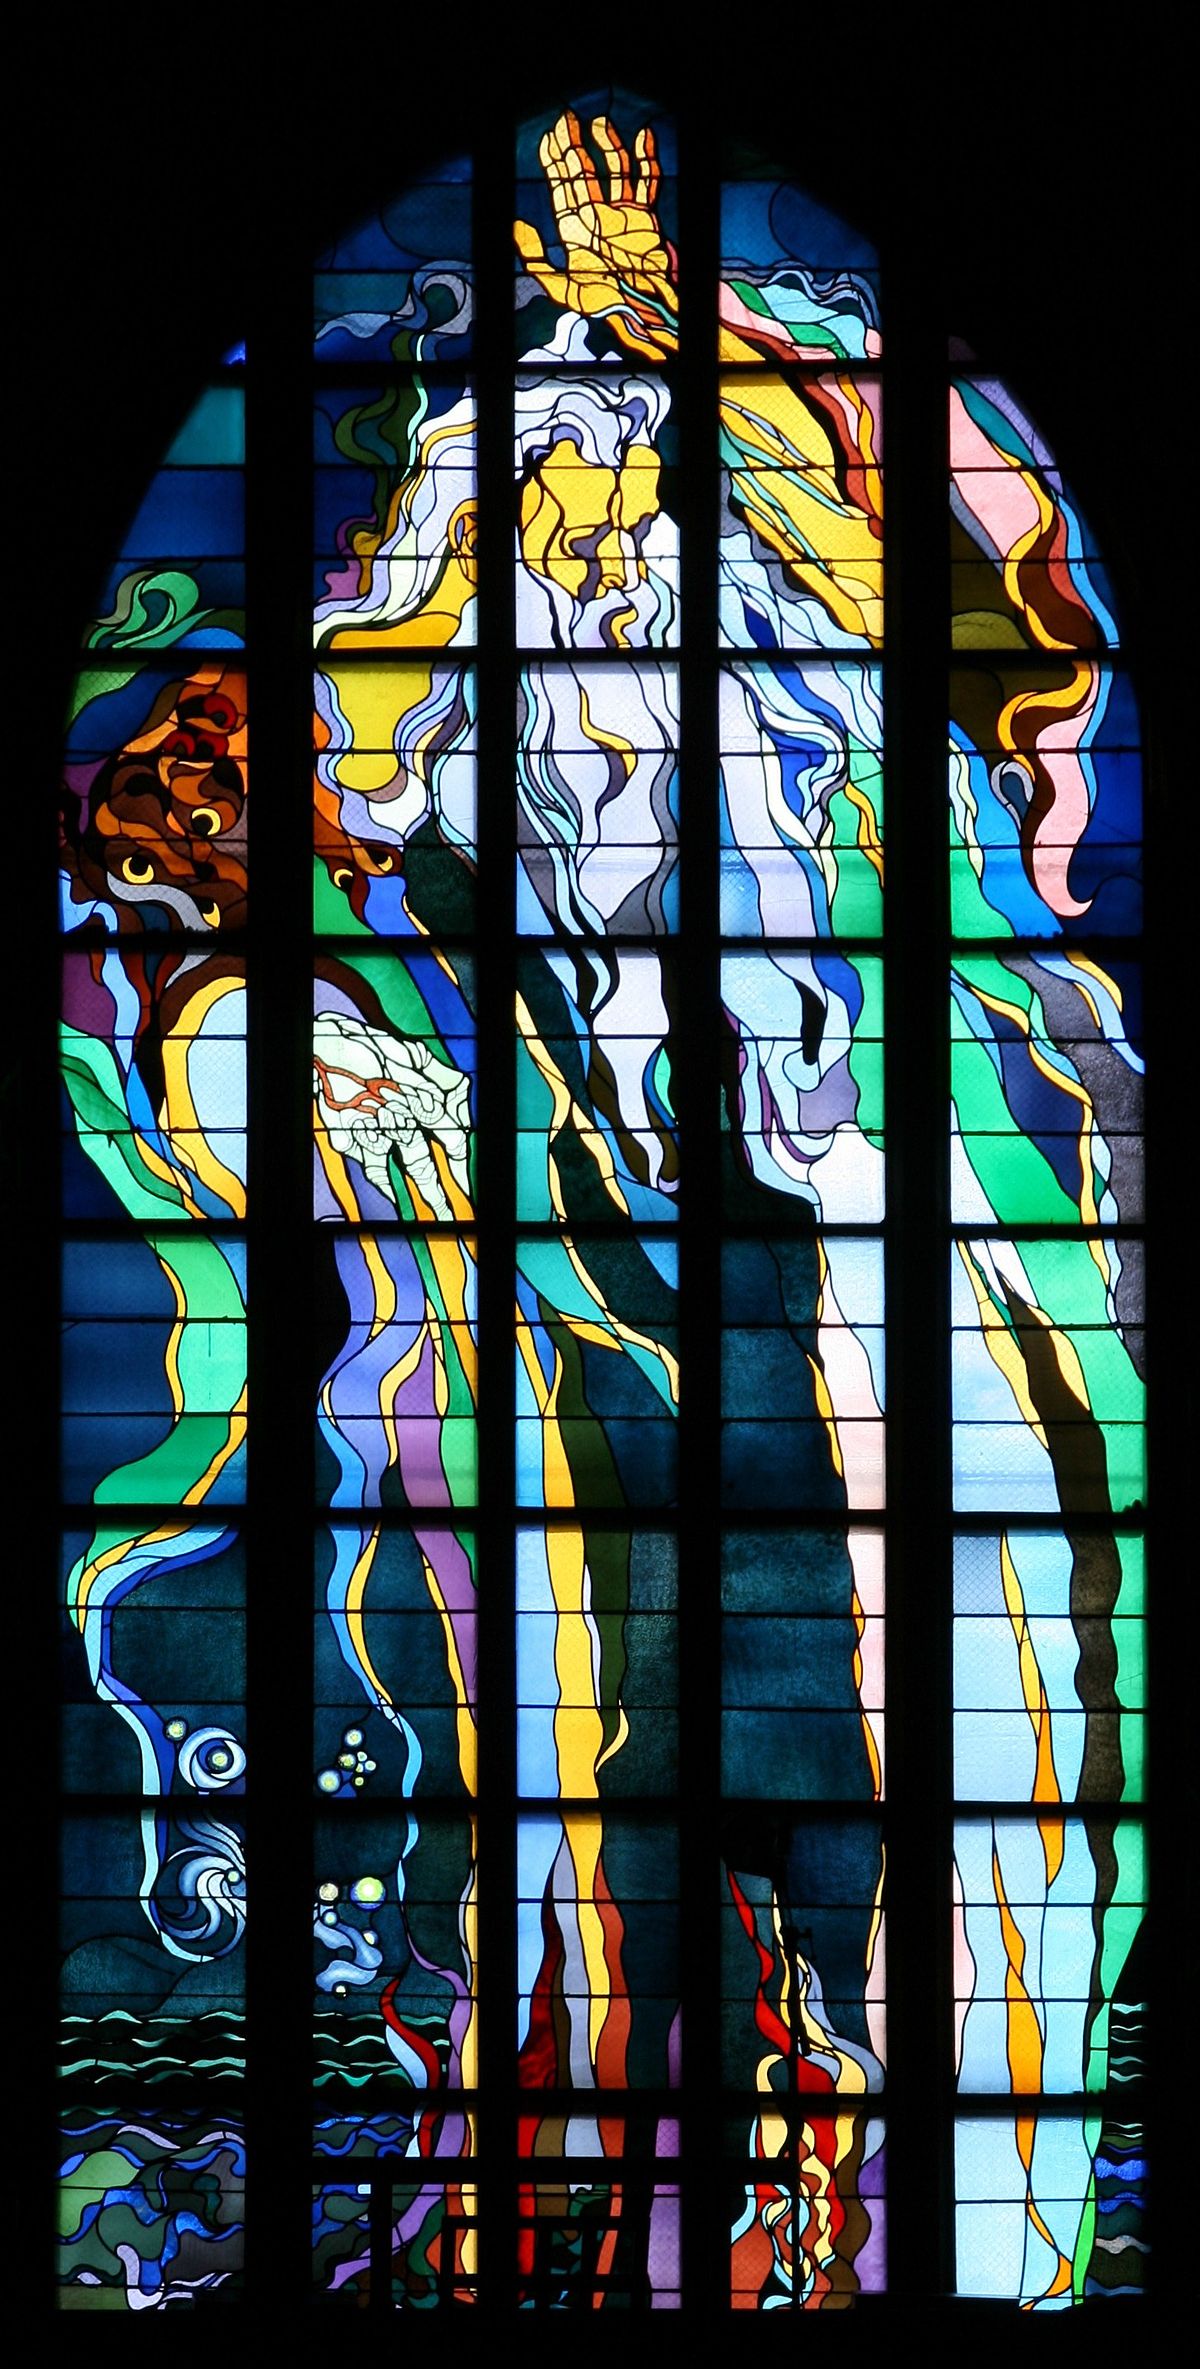 Kraków - Church of St. Francis - Stained glass 01.jpg